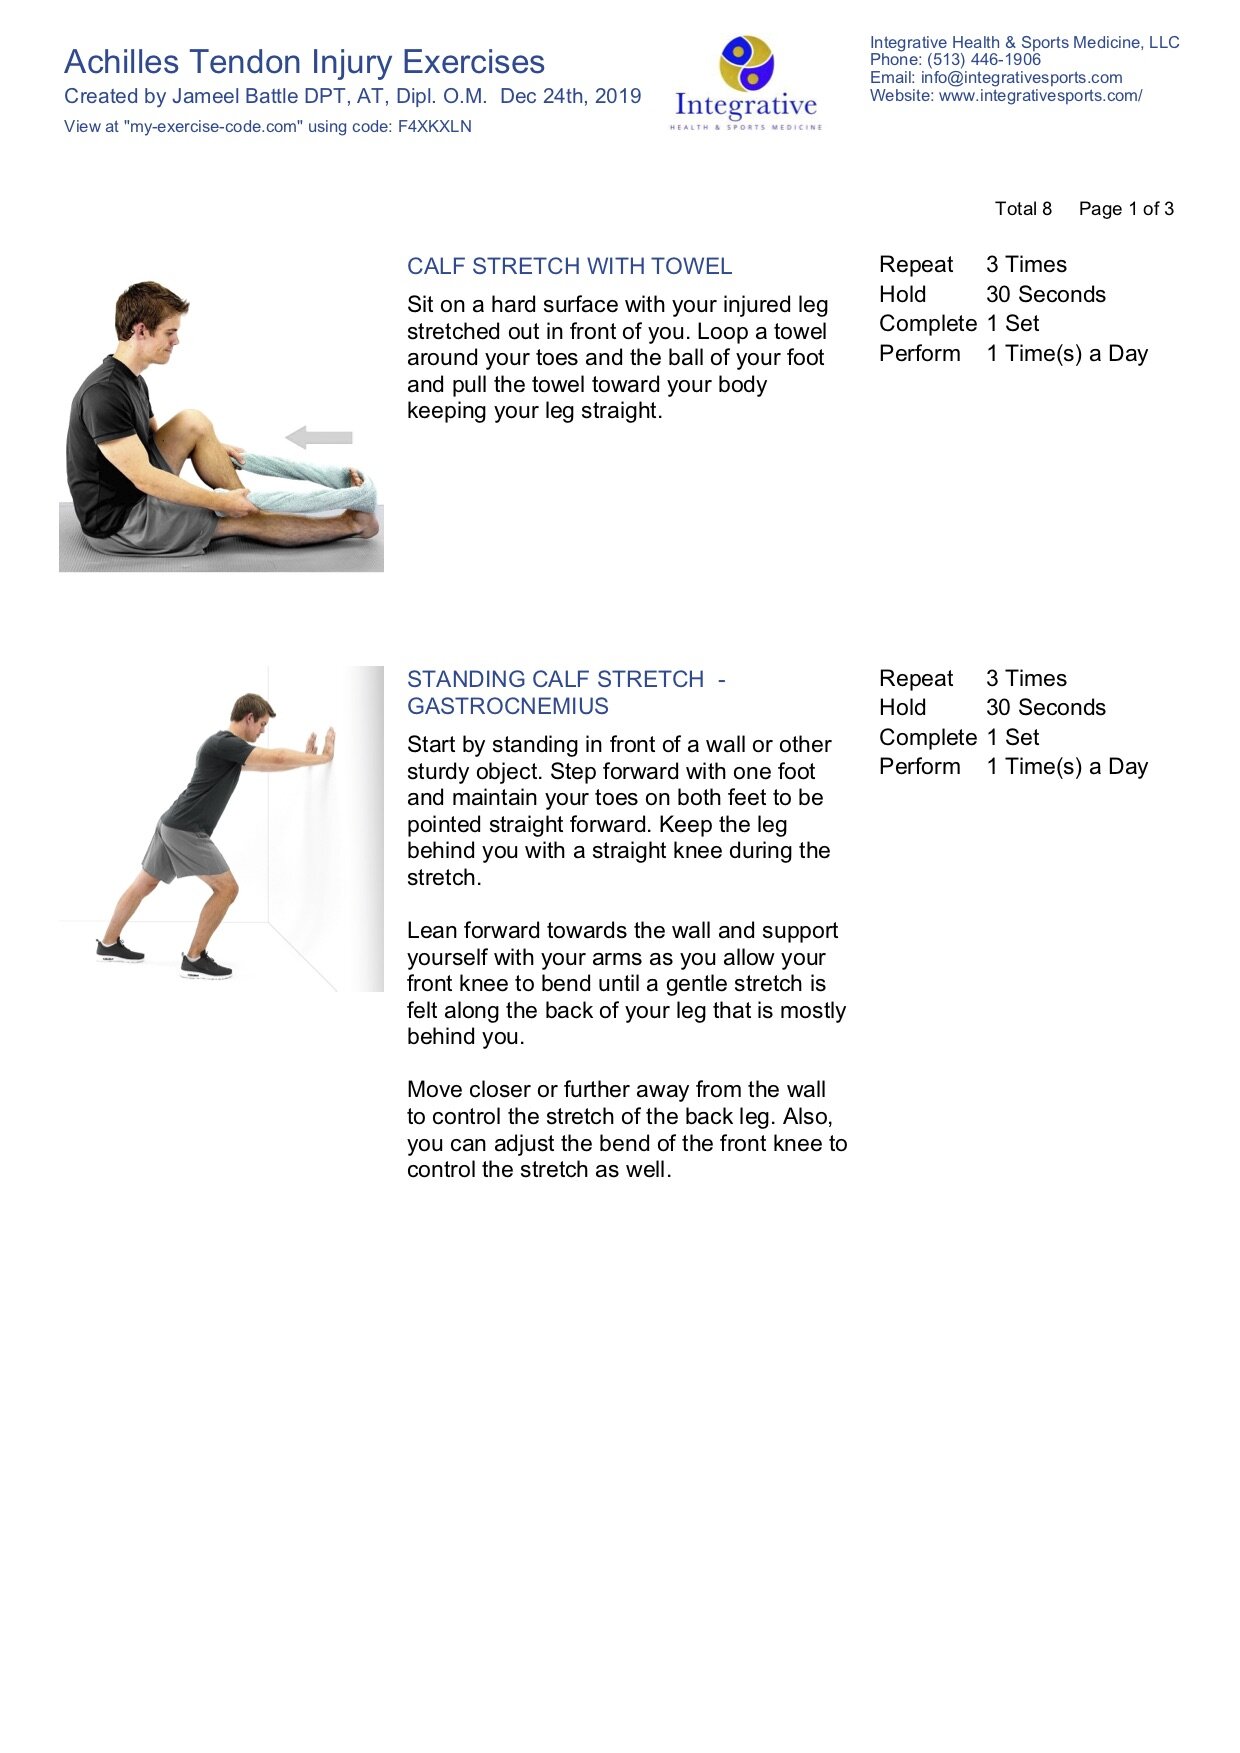 Exercises for Achilles Tendonitis/Tendinopathy - YouTube